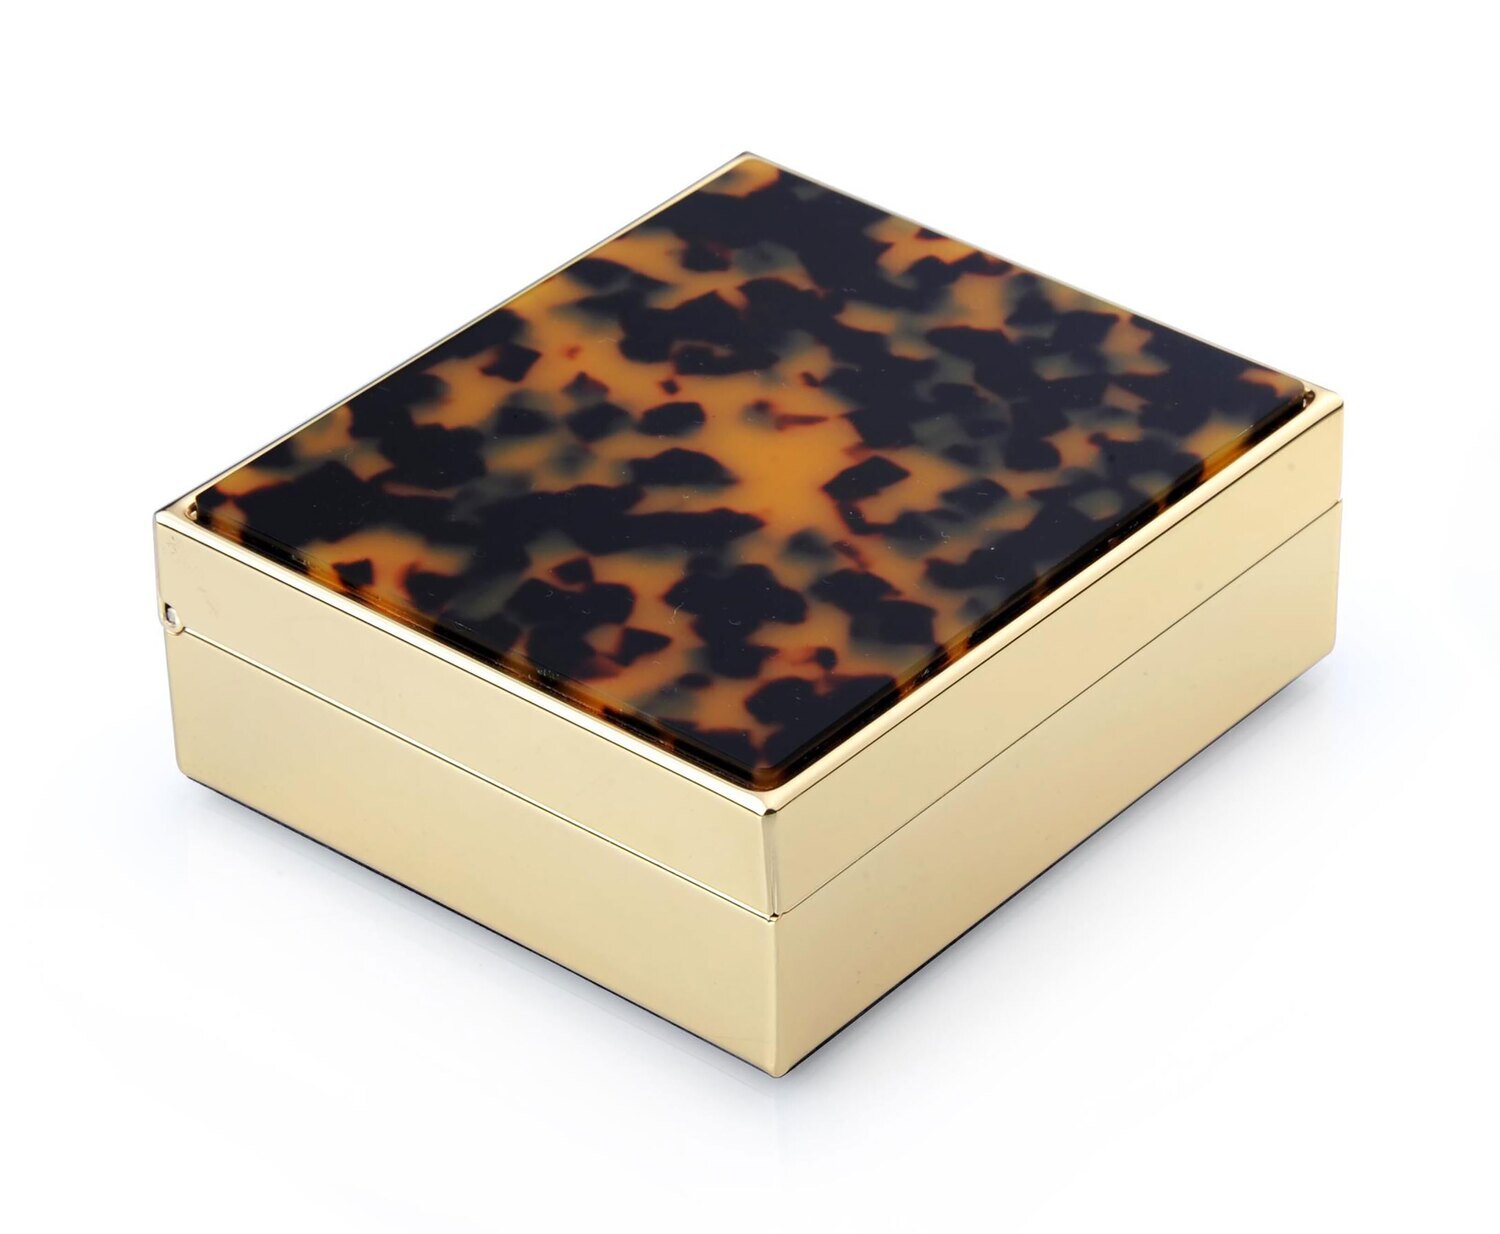 Addison Ross Tortoiseshell & Gold Box 4 x 3 Inch Gold-plated BX1002